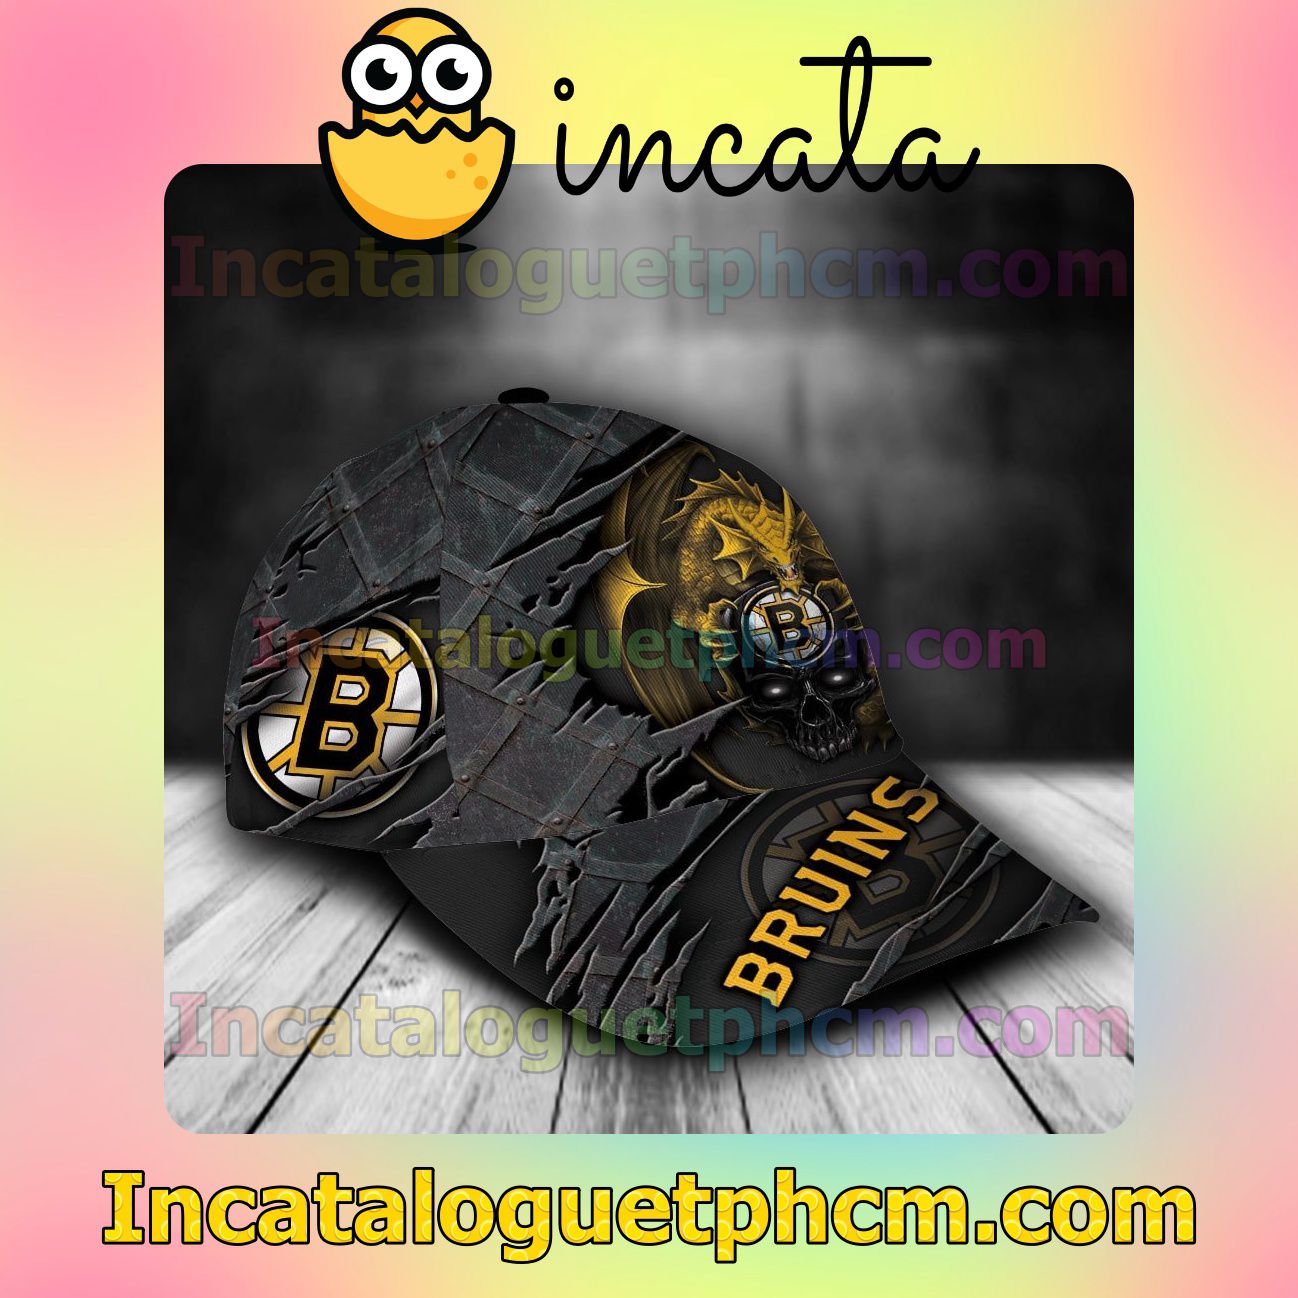 Print On Demand Boston Bruins Dragon Crack 3D NHL Customized Hat Caps